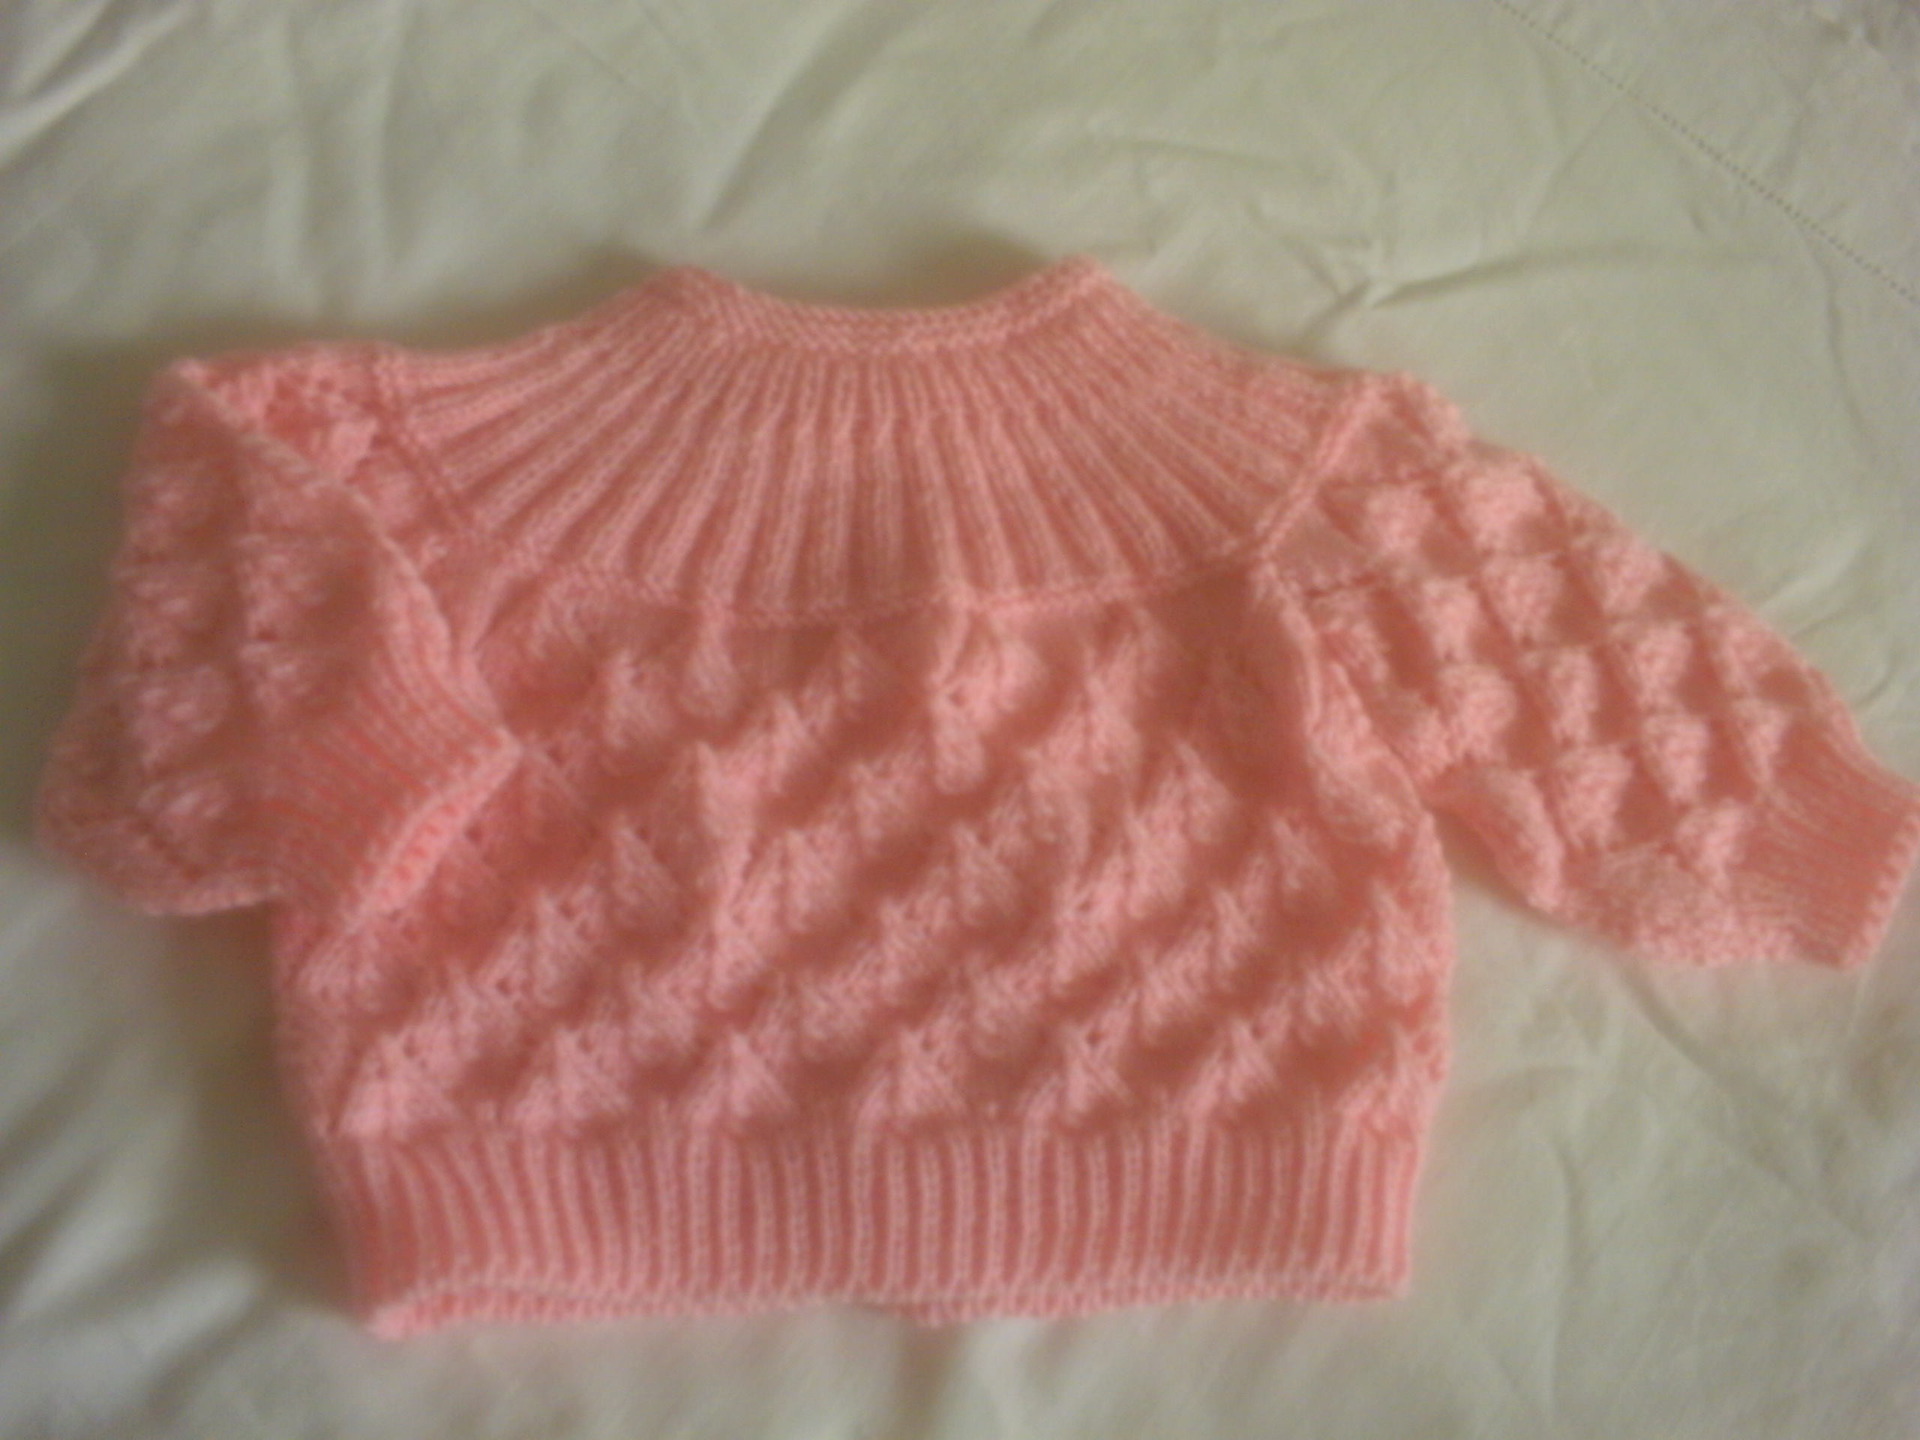 brassiere a tricoter pour bebe